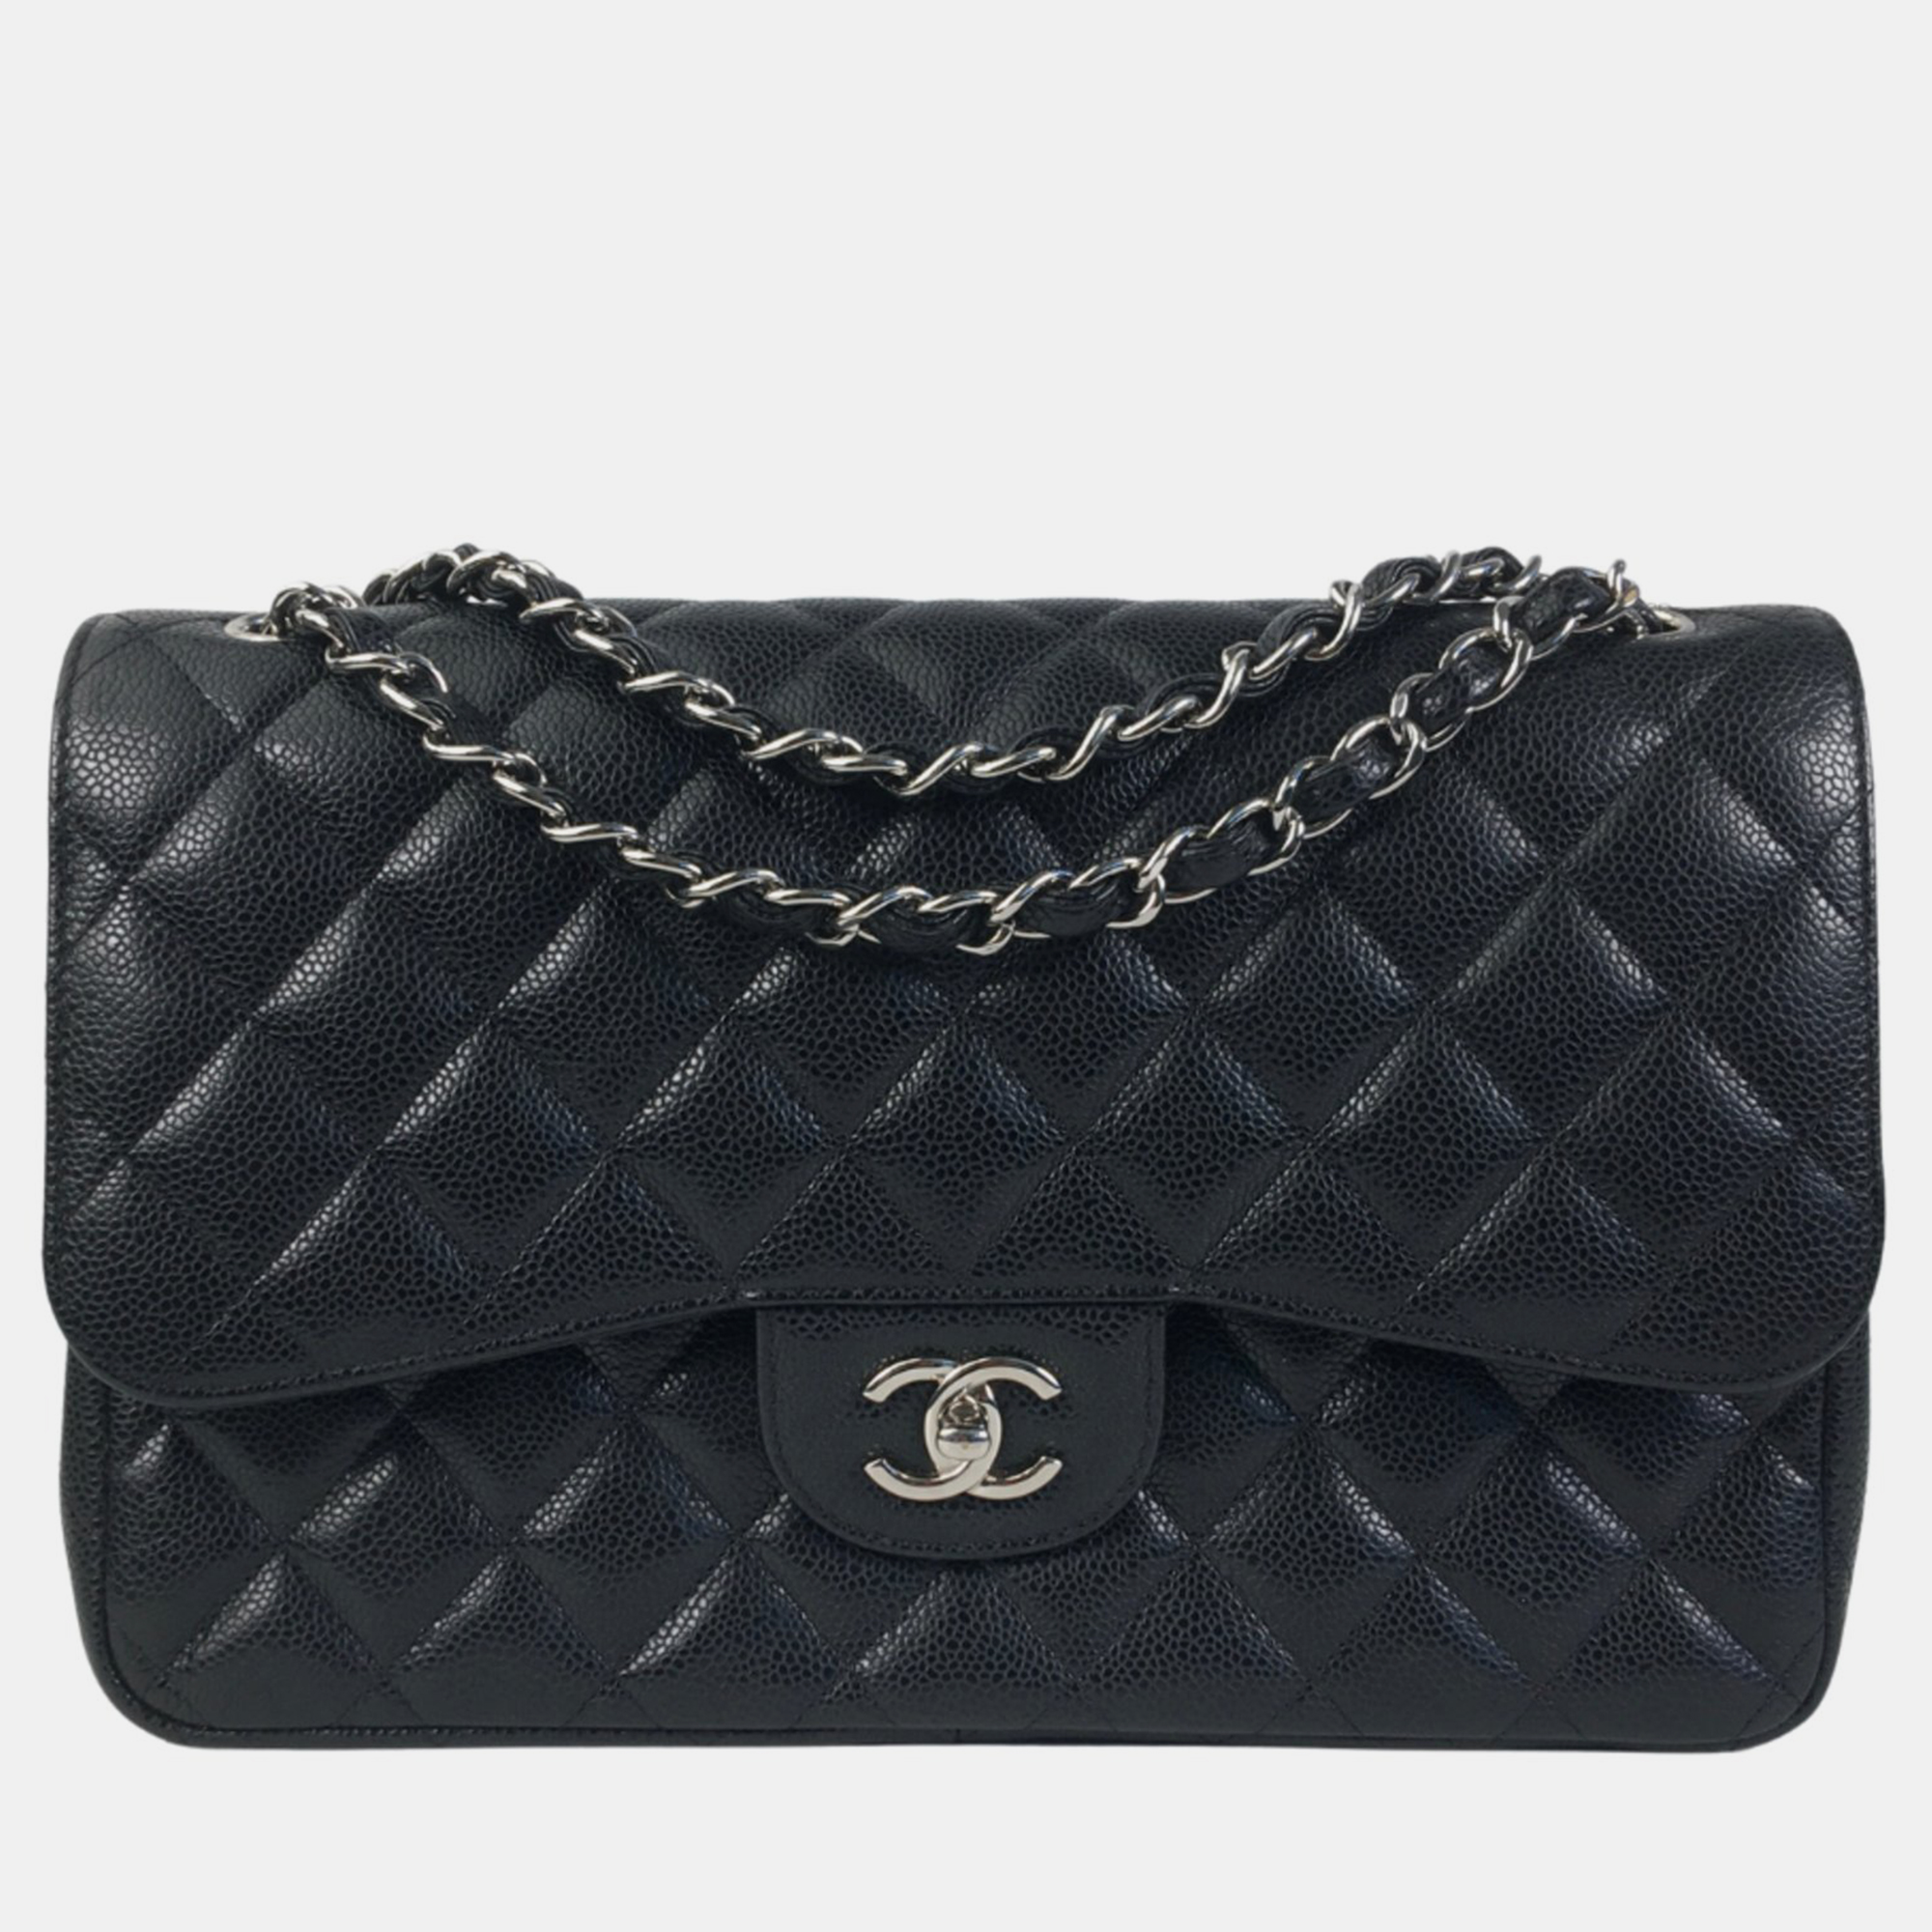 Chanel black lambskin leather jumbo classic double flap shoulder bag